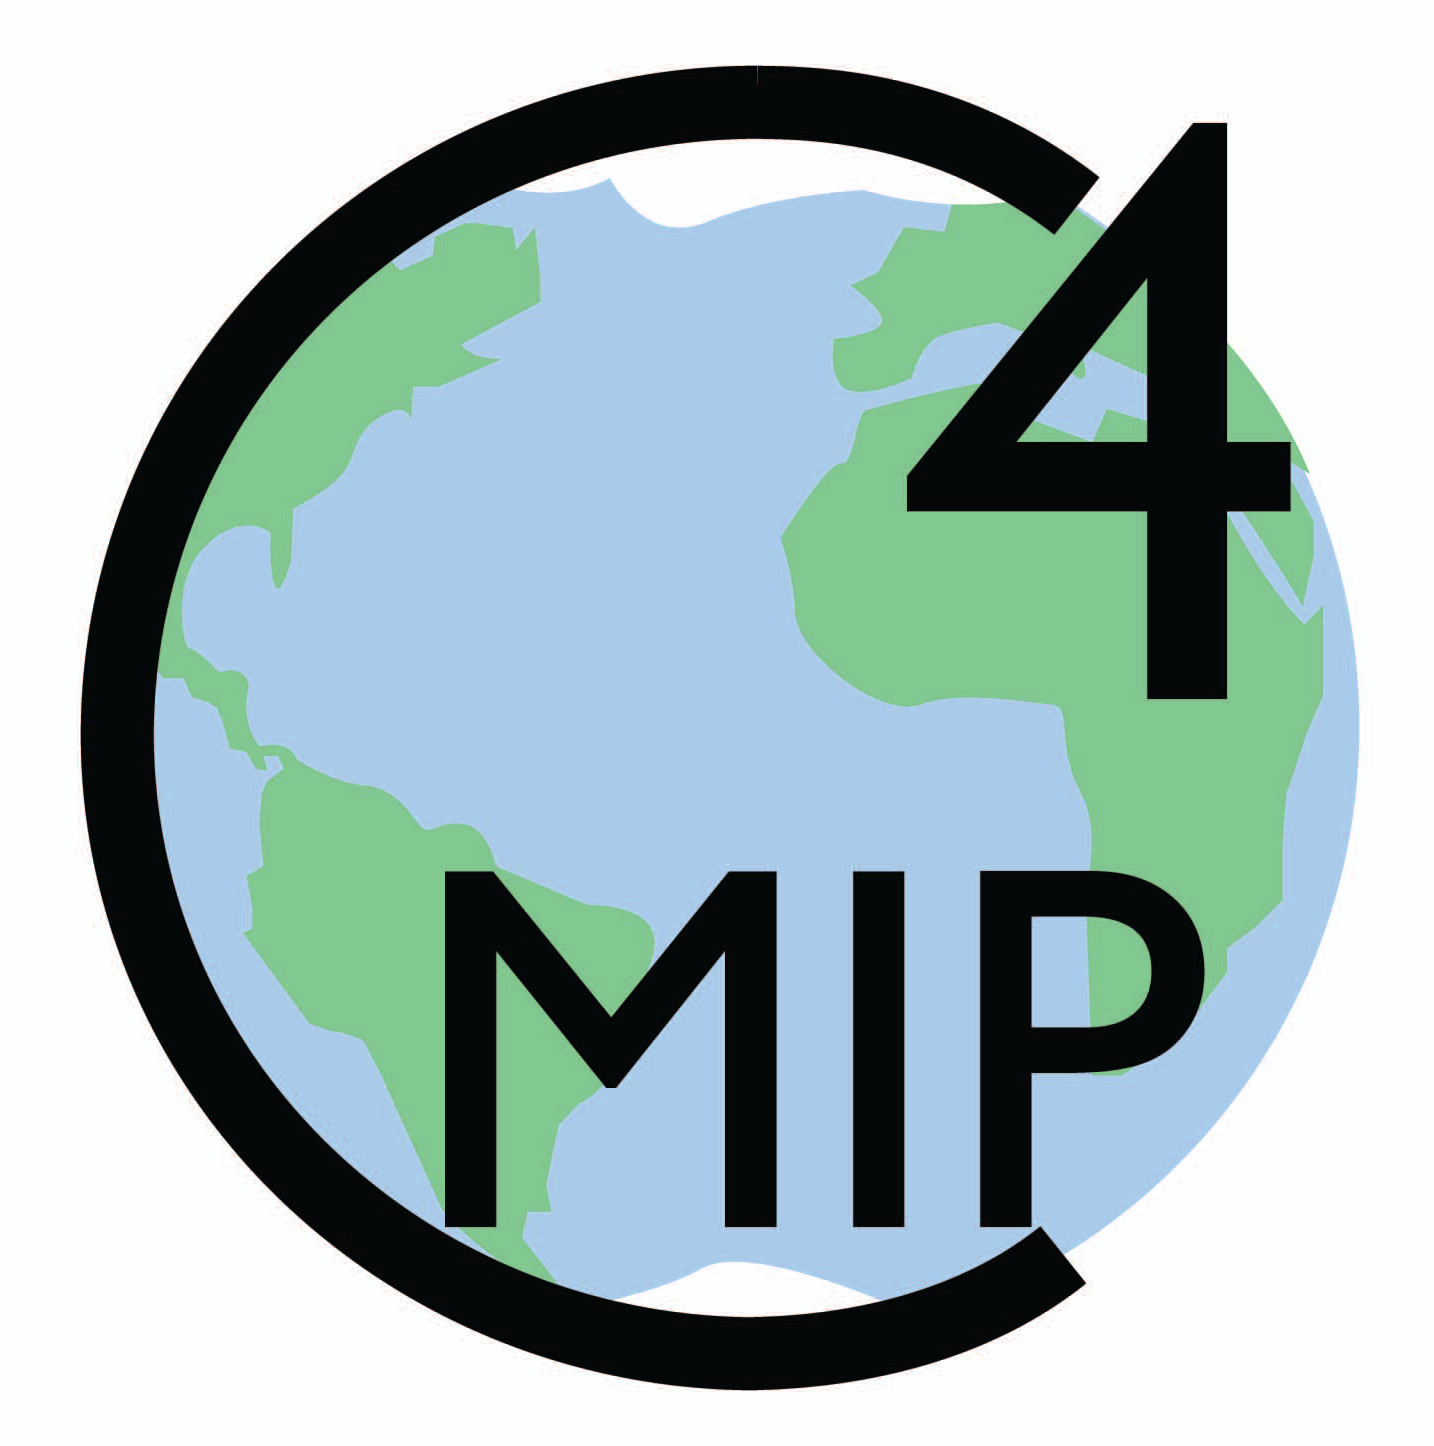 c4mip logo small crop